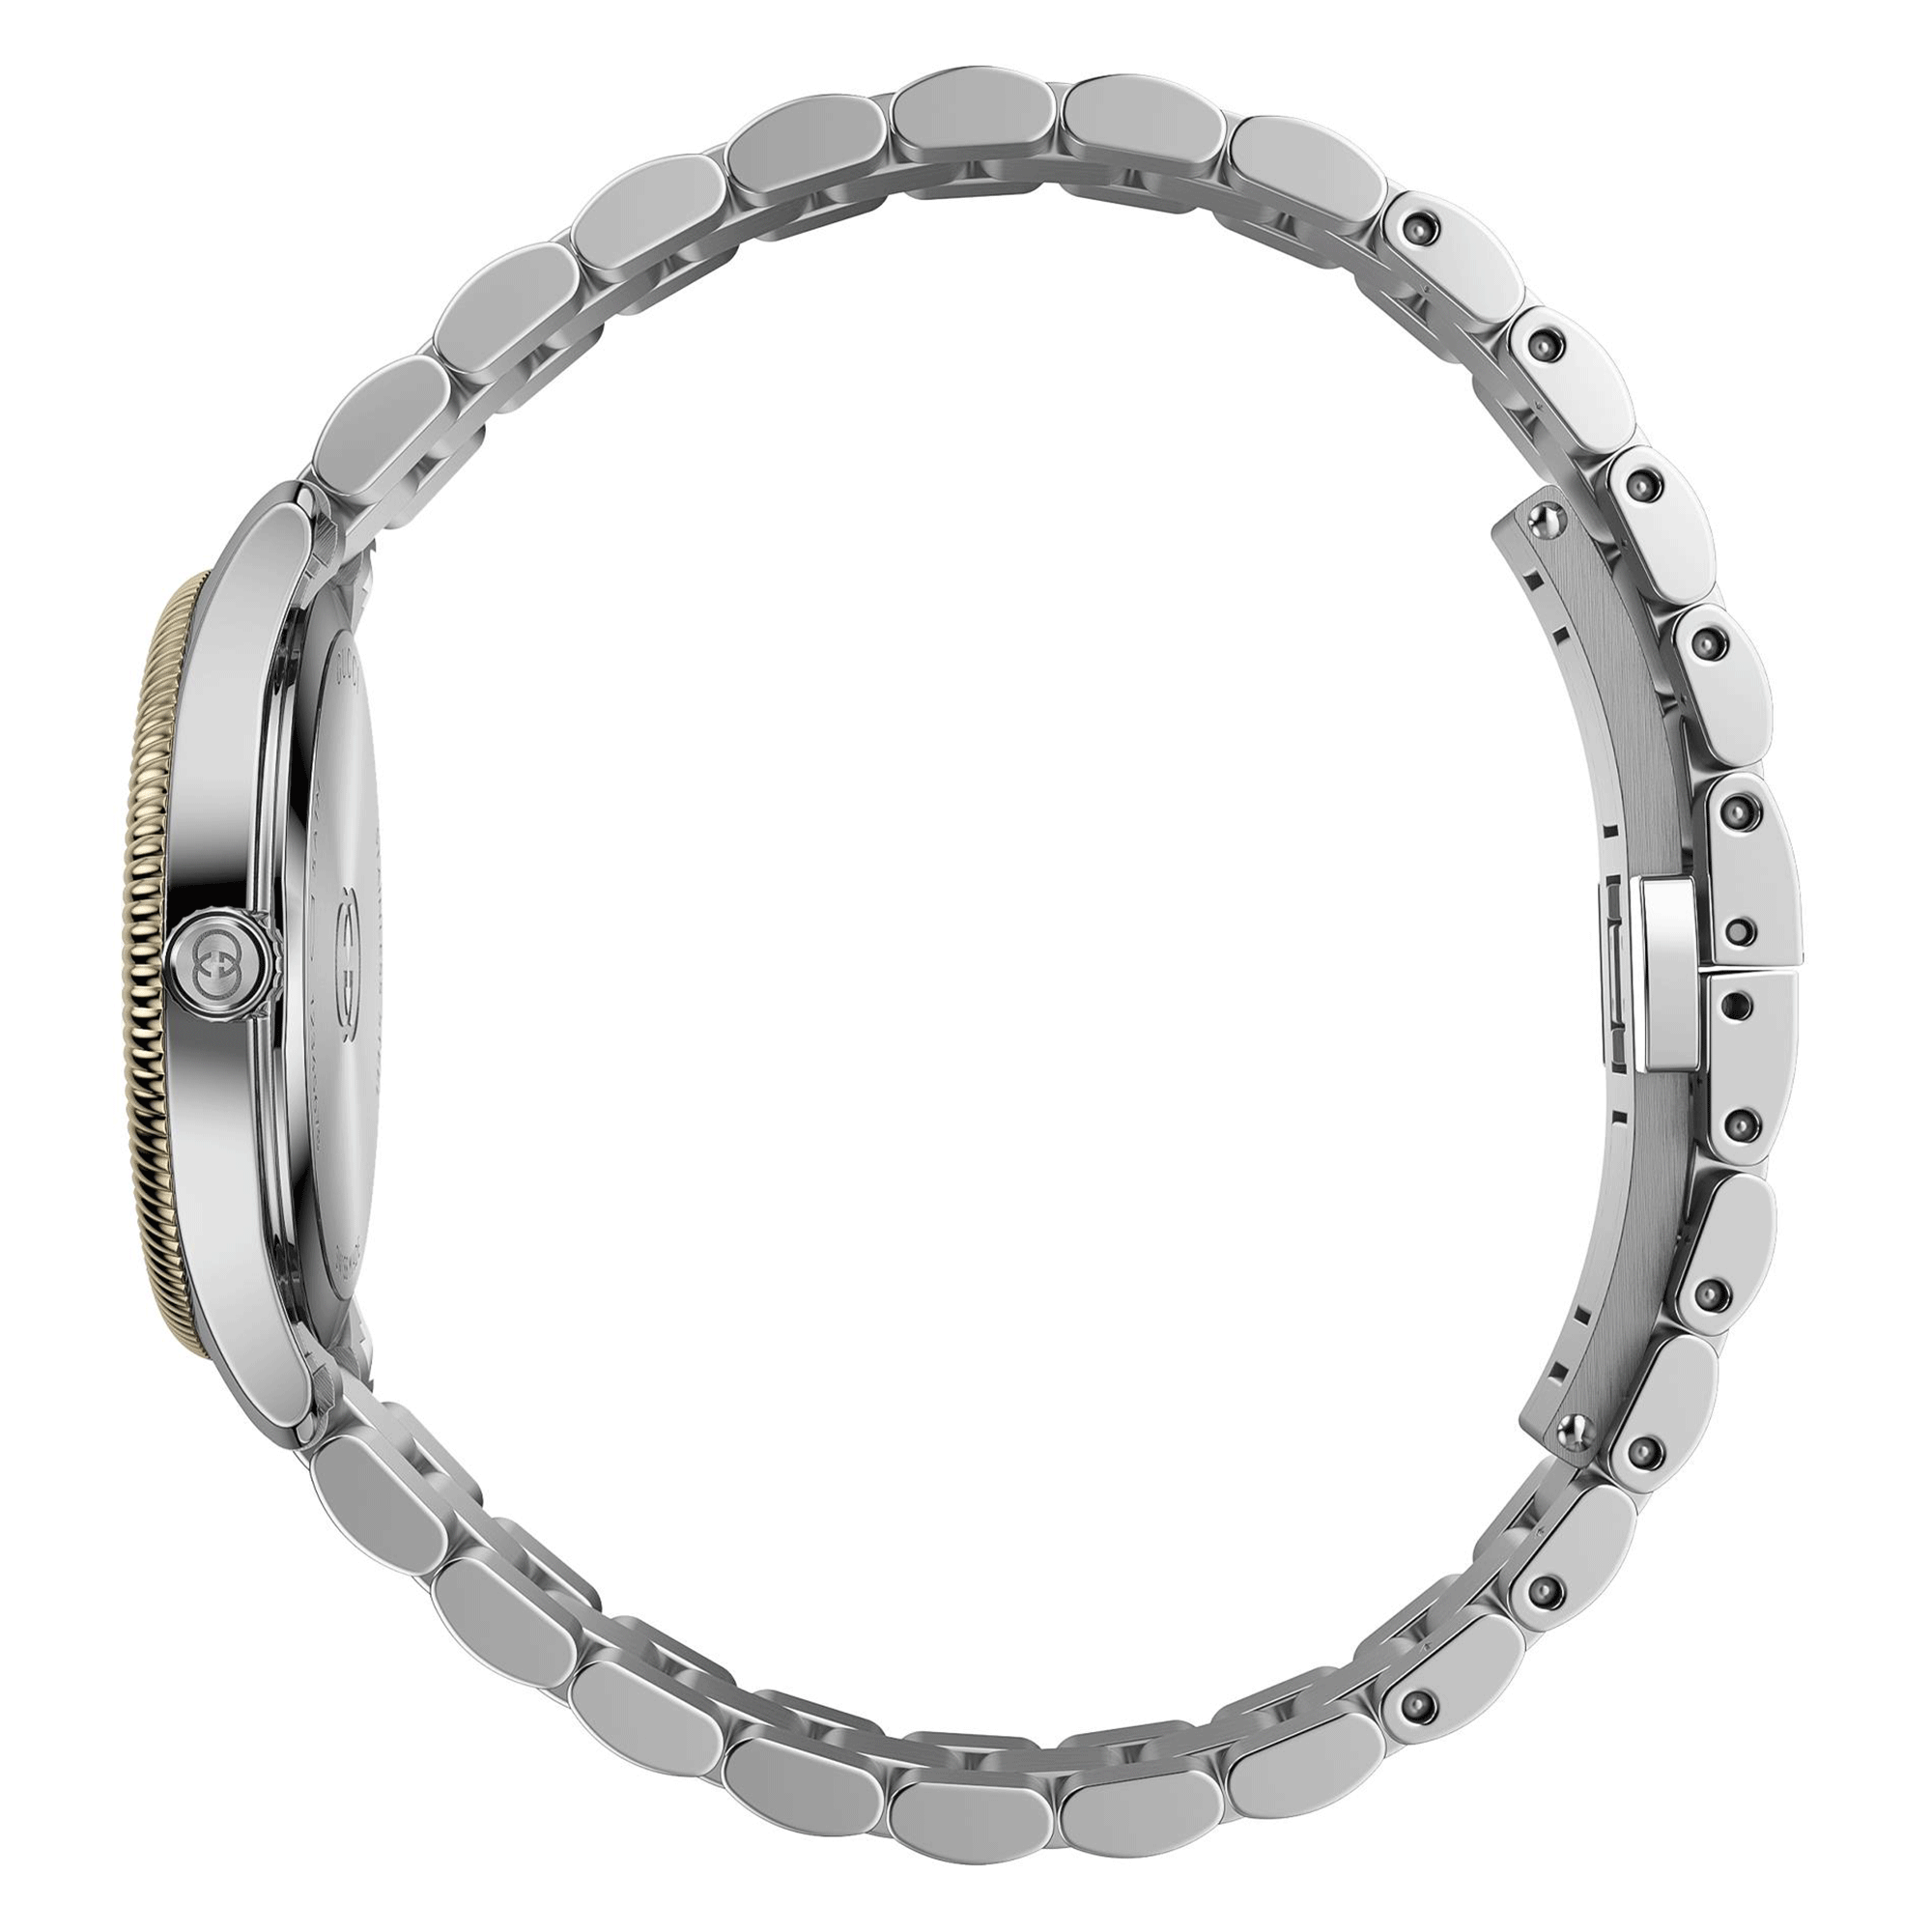 G-Timeless Quartz 29mm Stainless Steel Silver Dial Gold Plated Bezel Bracelet Watch